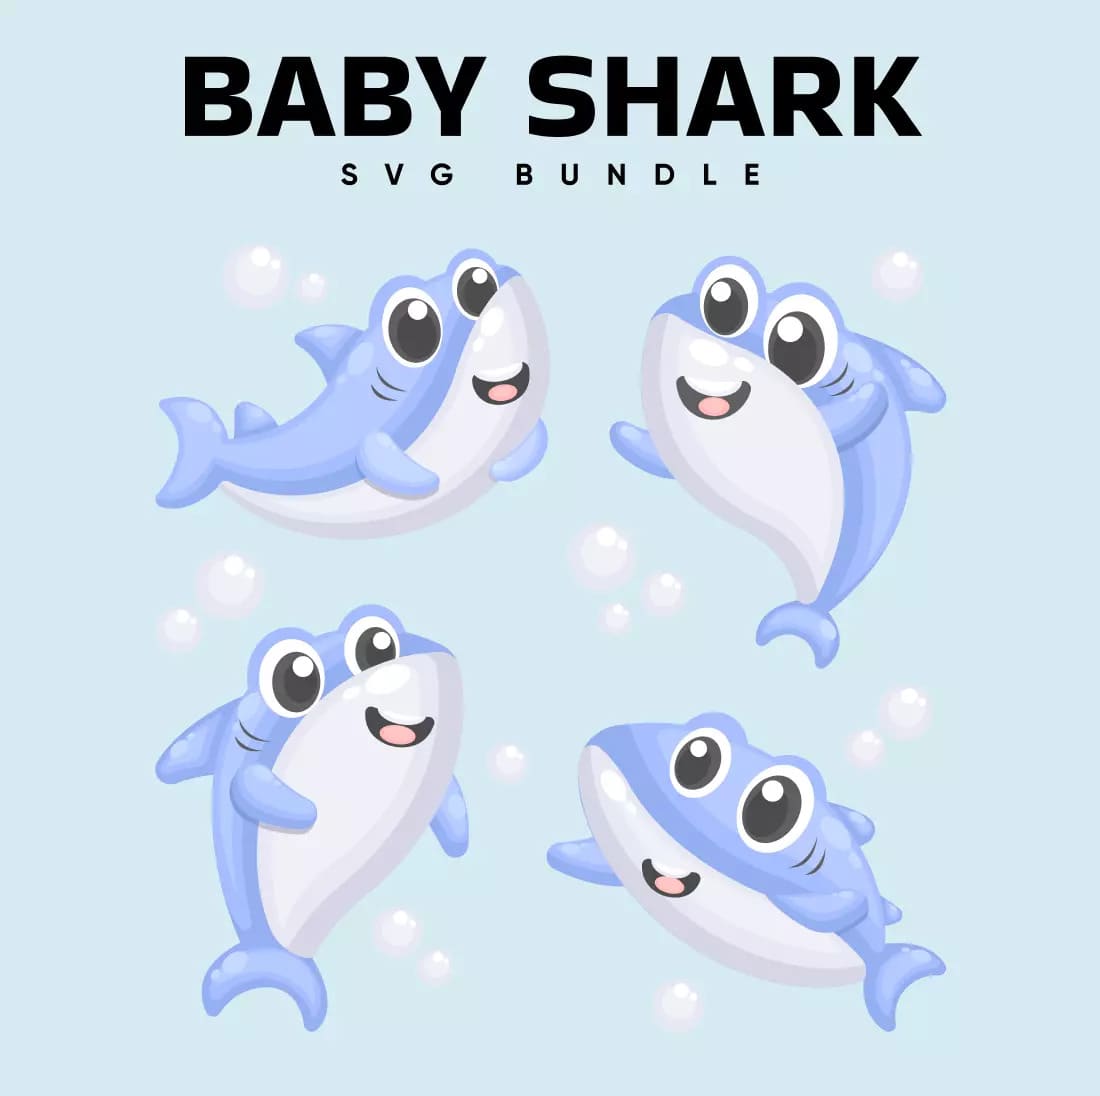 Baby Shark SVG Bundle Preview image.